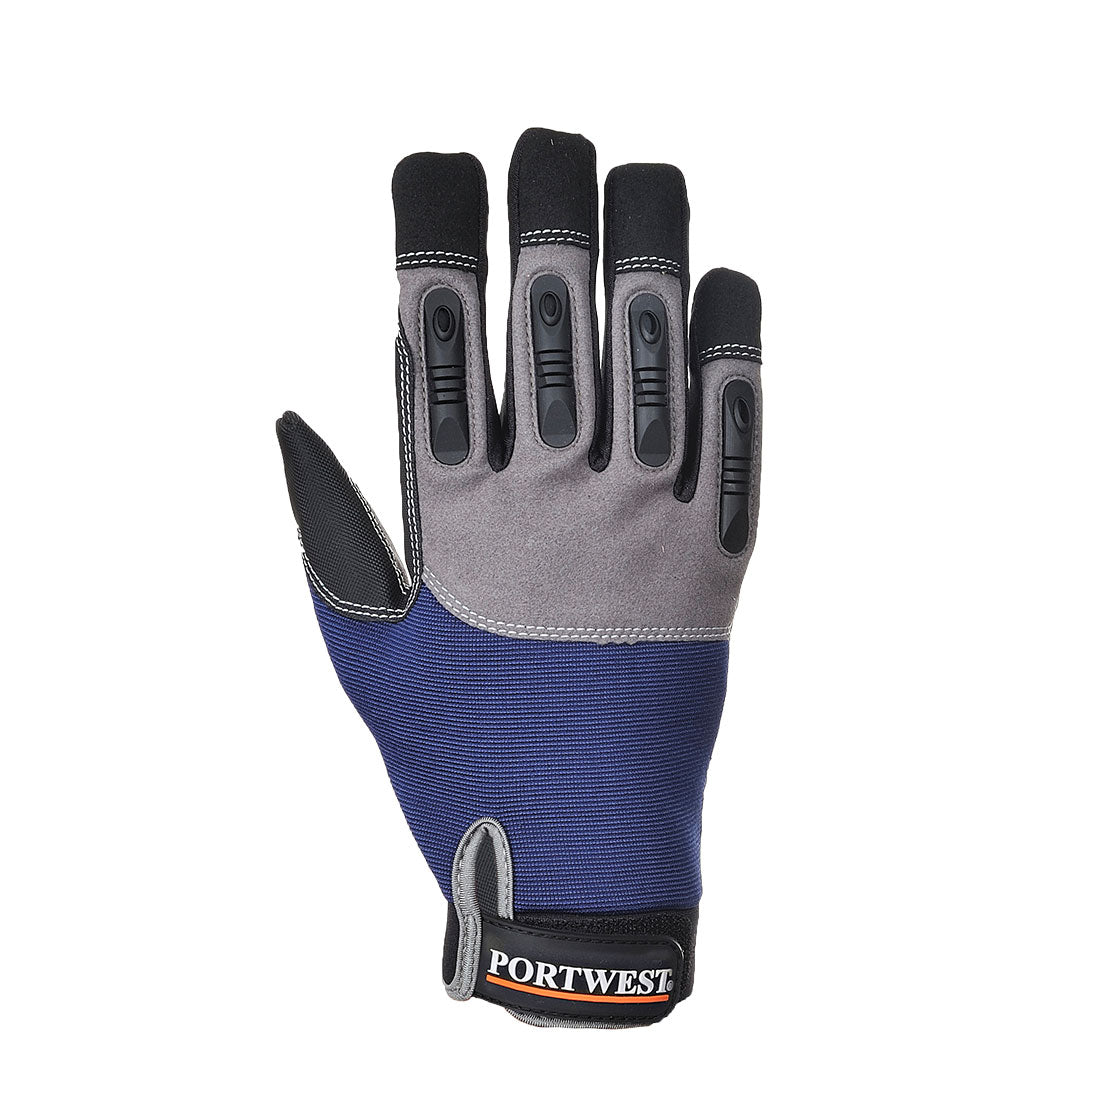 Portwest Work Gloves - A720 - Impact - High Performance Glove Navy